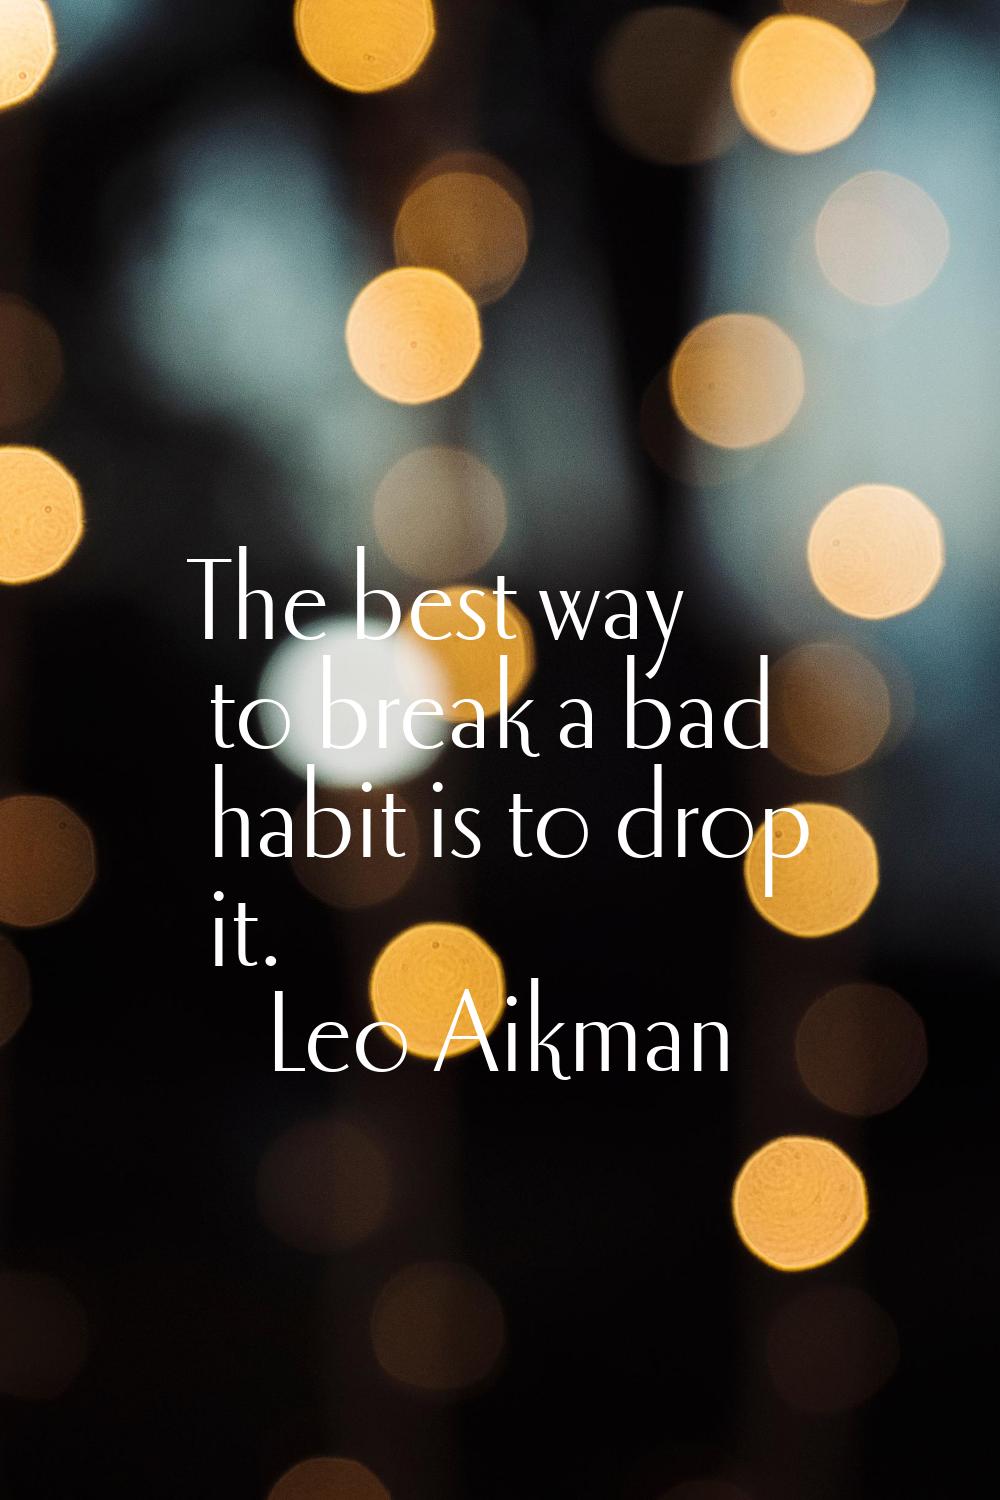 The best way to break a bad habit is to drop it.